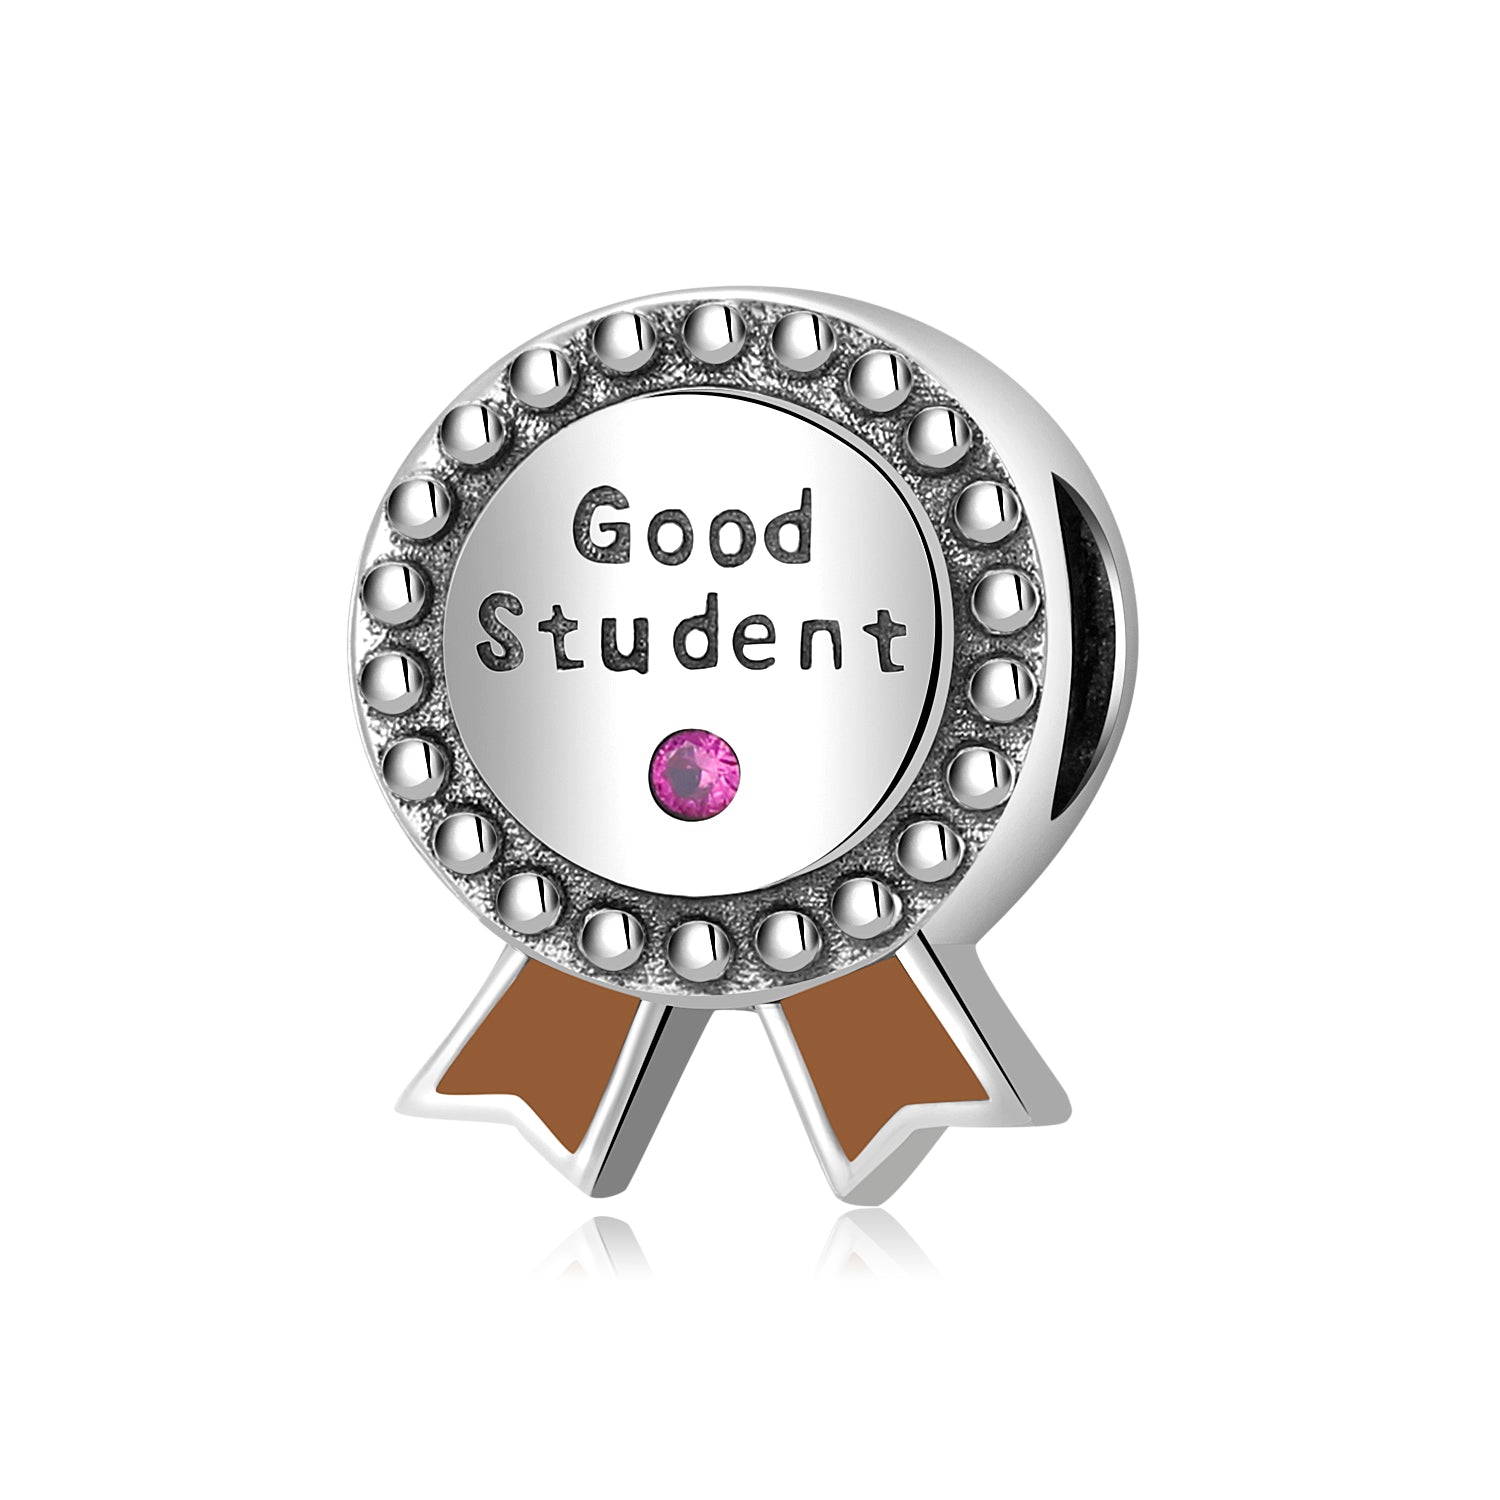 Good Student badge